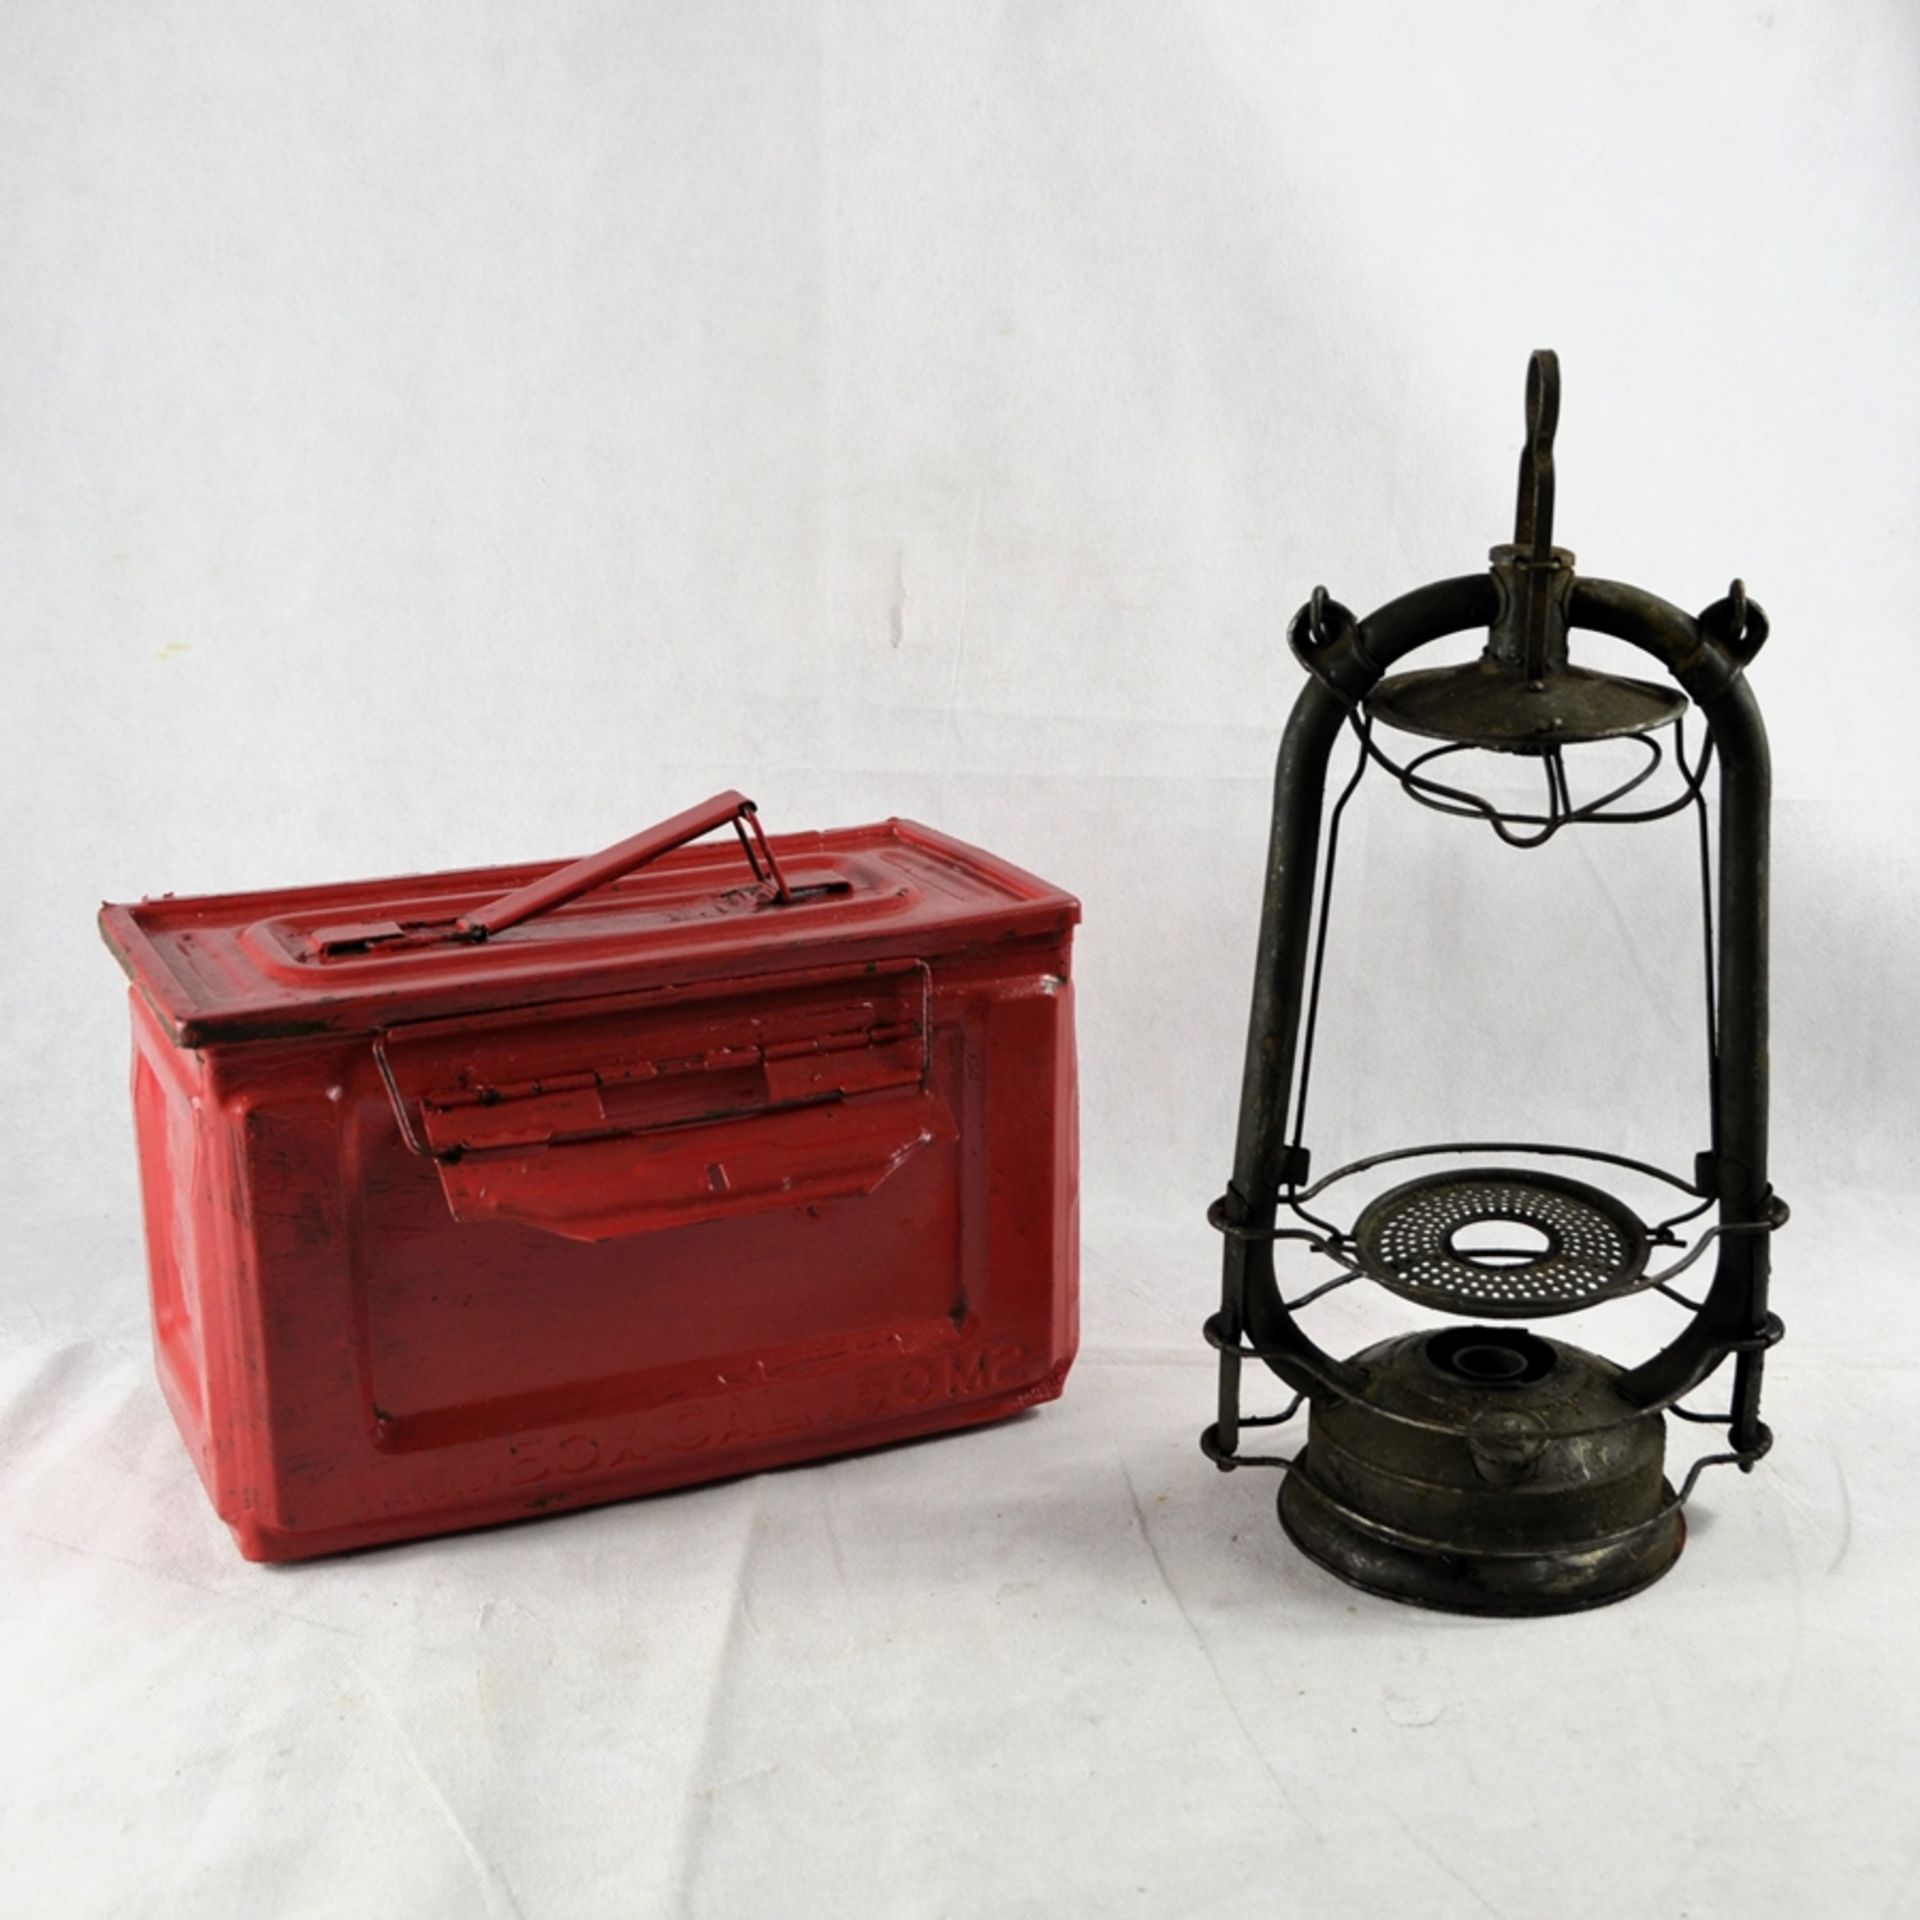 US Munitionsbox .50 u. Feuerhand Petroleumlampe Nr. 323 Konvolut, Lampe nicht vollständig